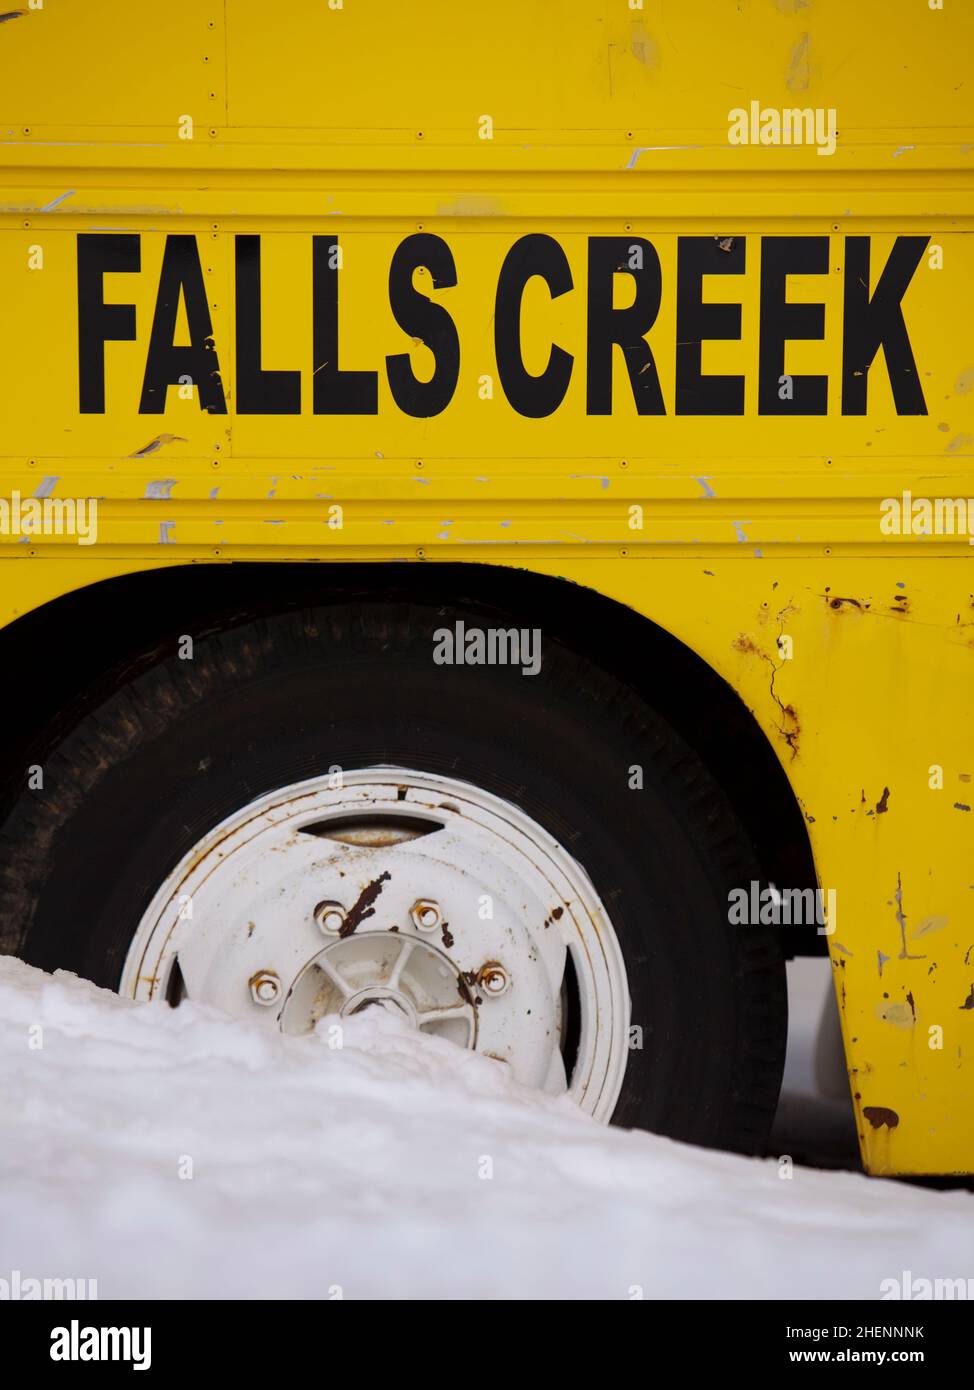 Falls Creek Terrain Park Institute Bus. Stock Photo